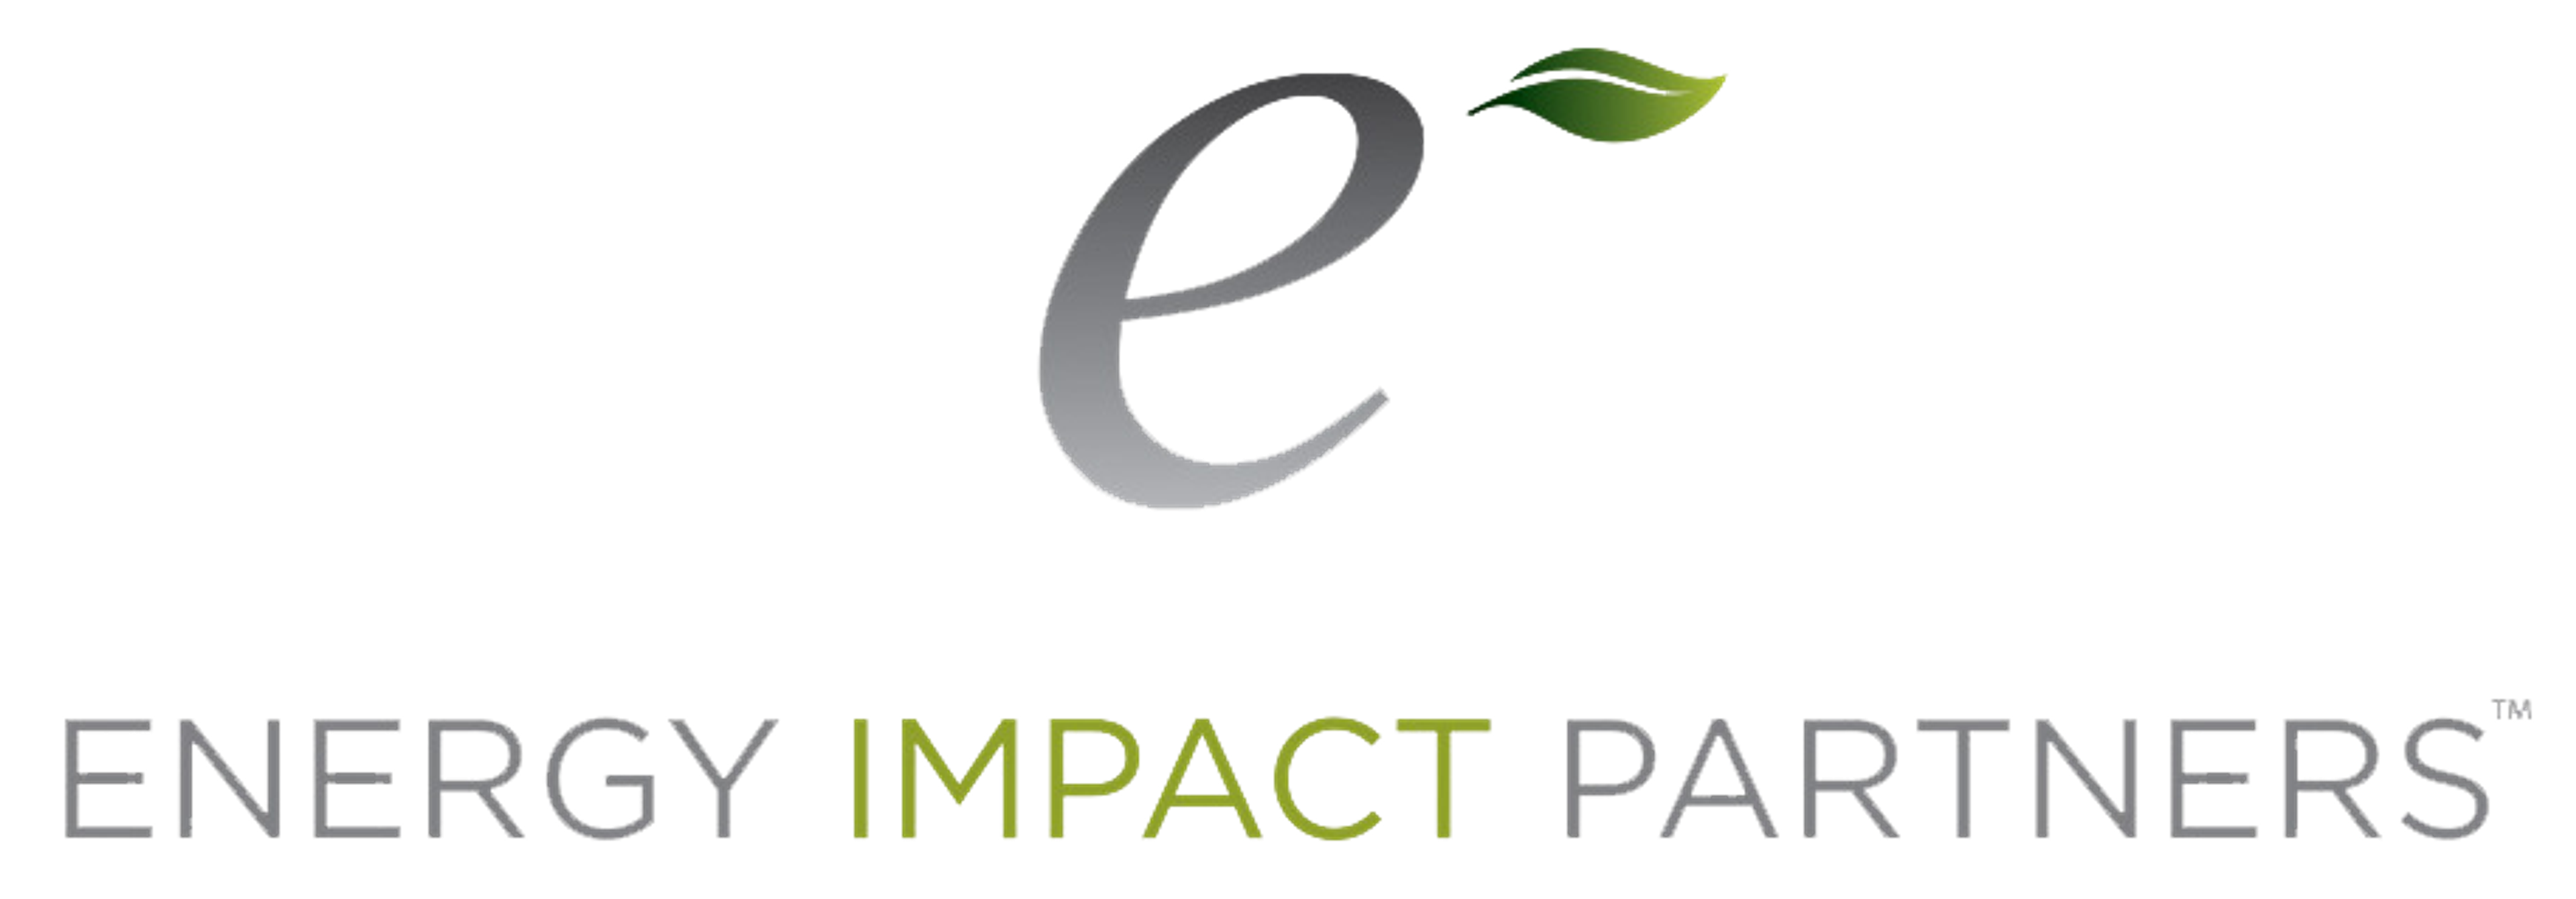 energy impact partners